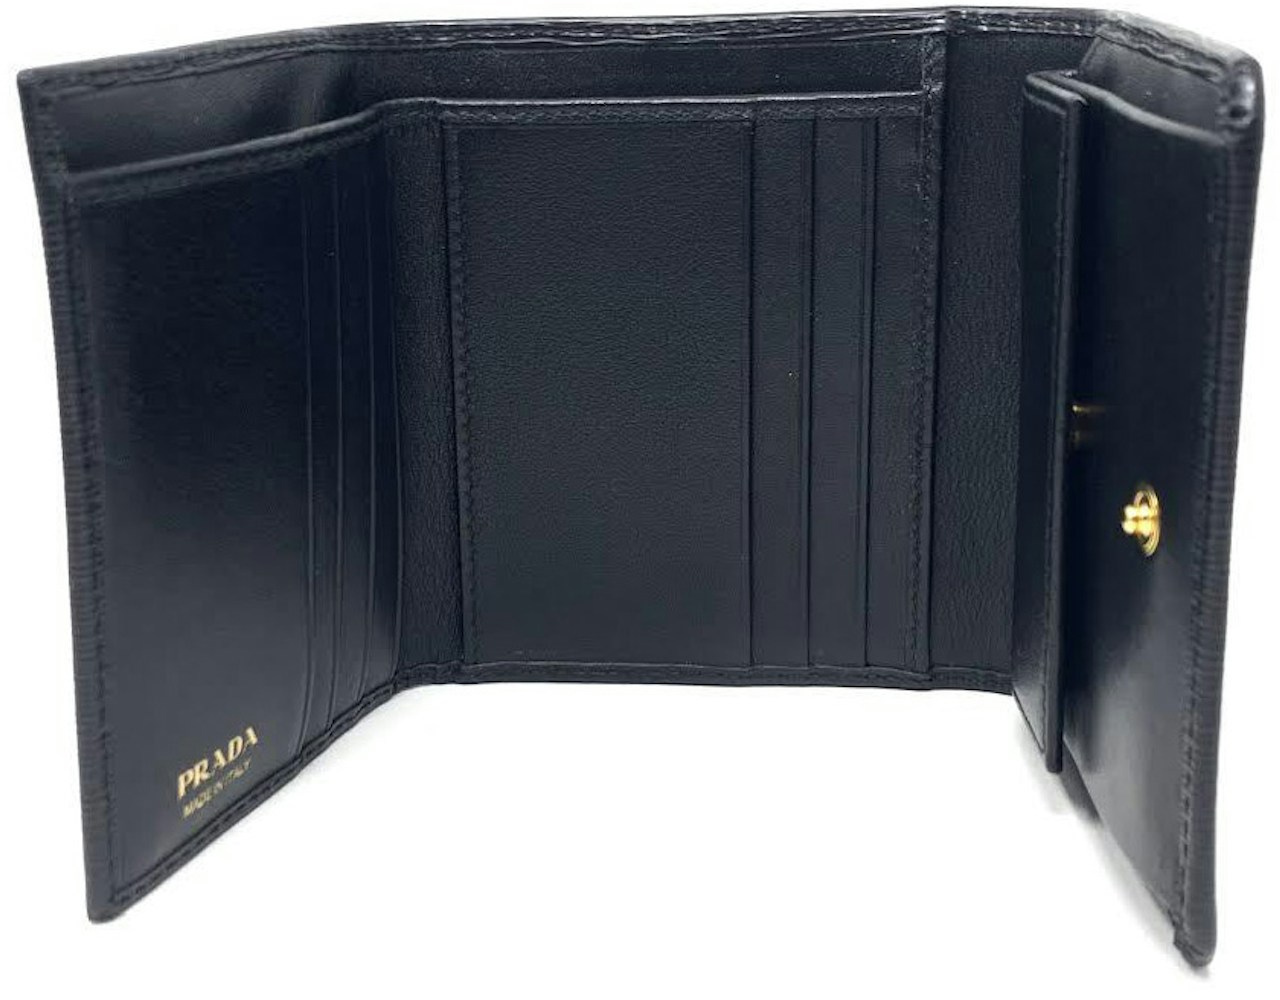 Prada Vitello Move Compact Wallet Black in Vitello Leather with Gold-tone